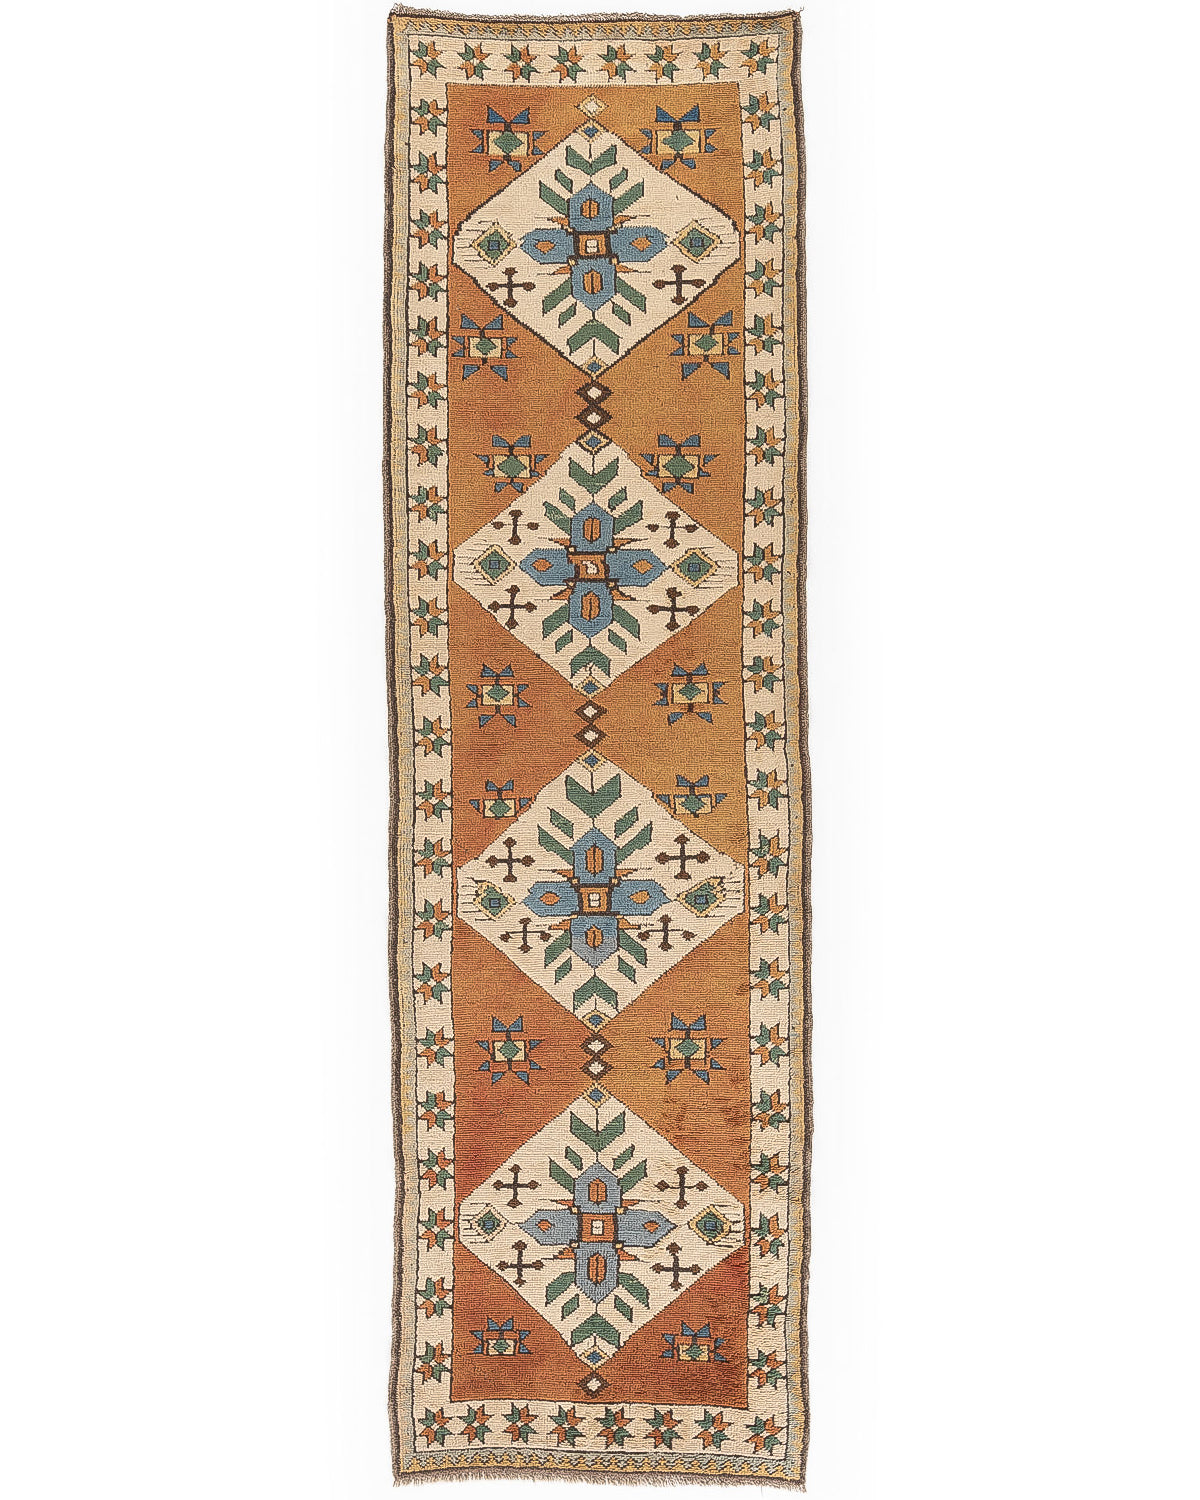 Oriental Turkish Runner Rug Handmade Wool On Wool Kars 98 X 315 Cm - 3' 3'' X 10' 5'' Orange C011